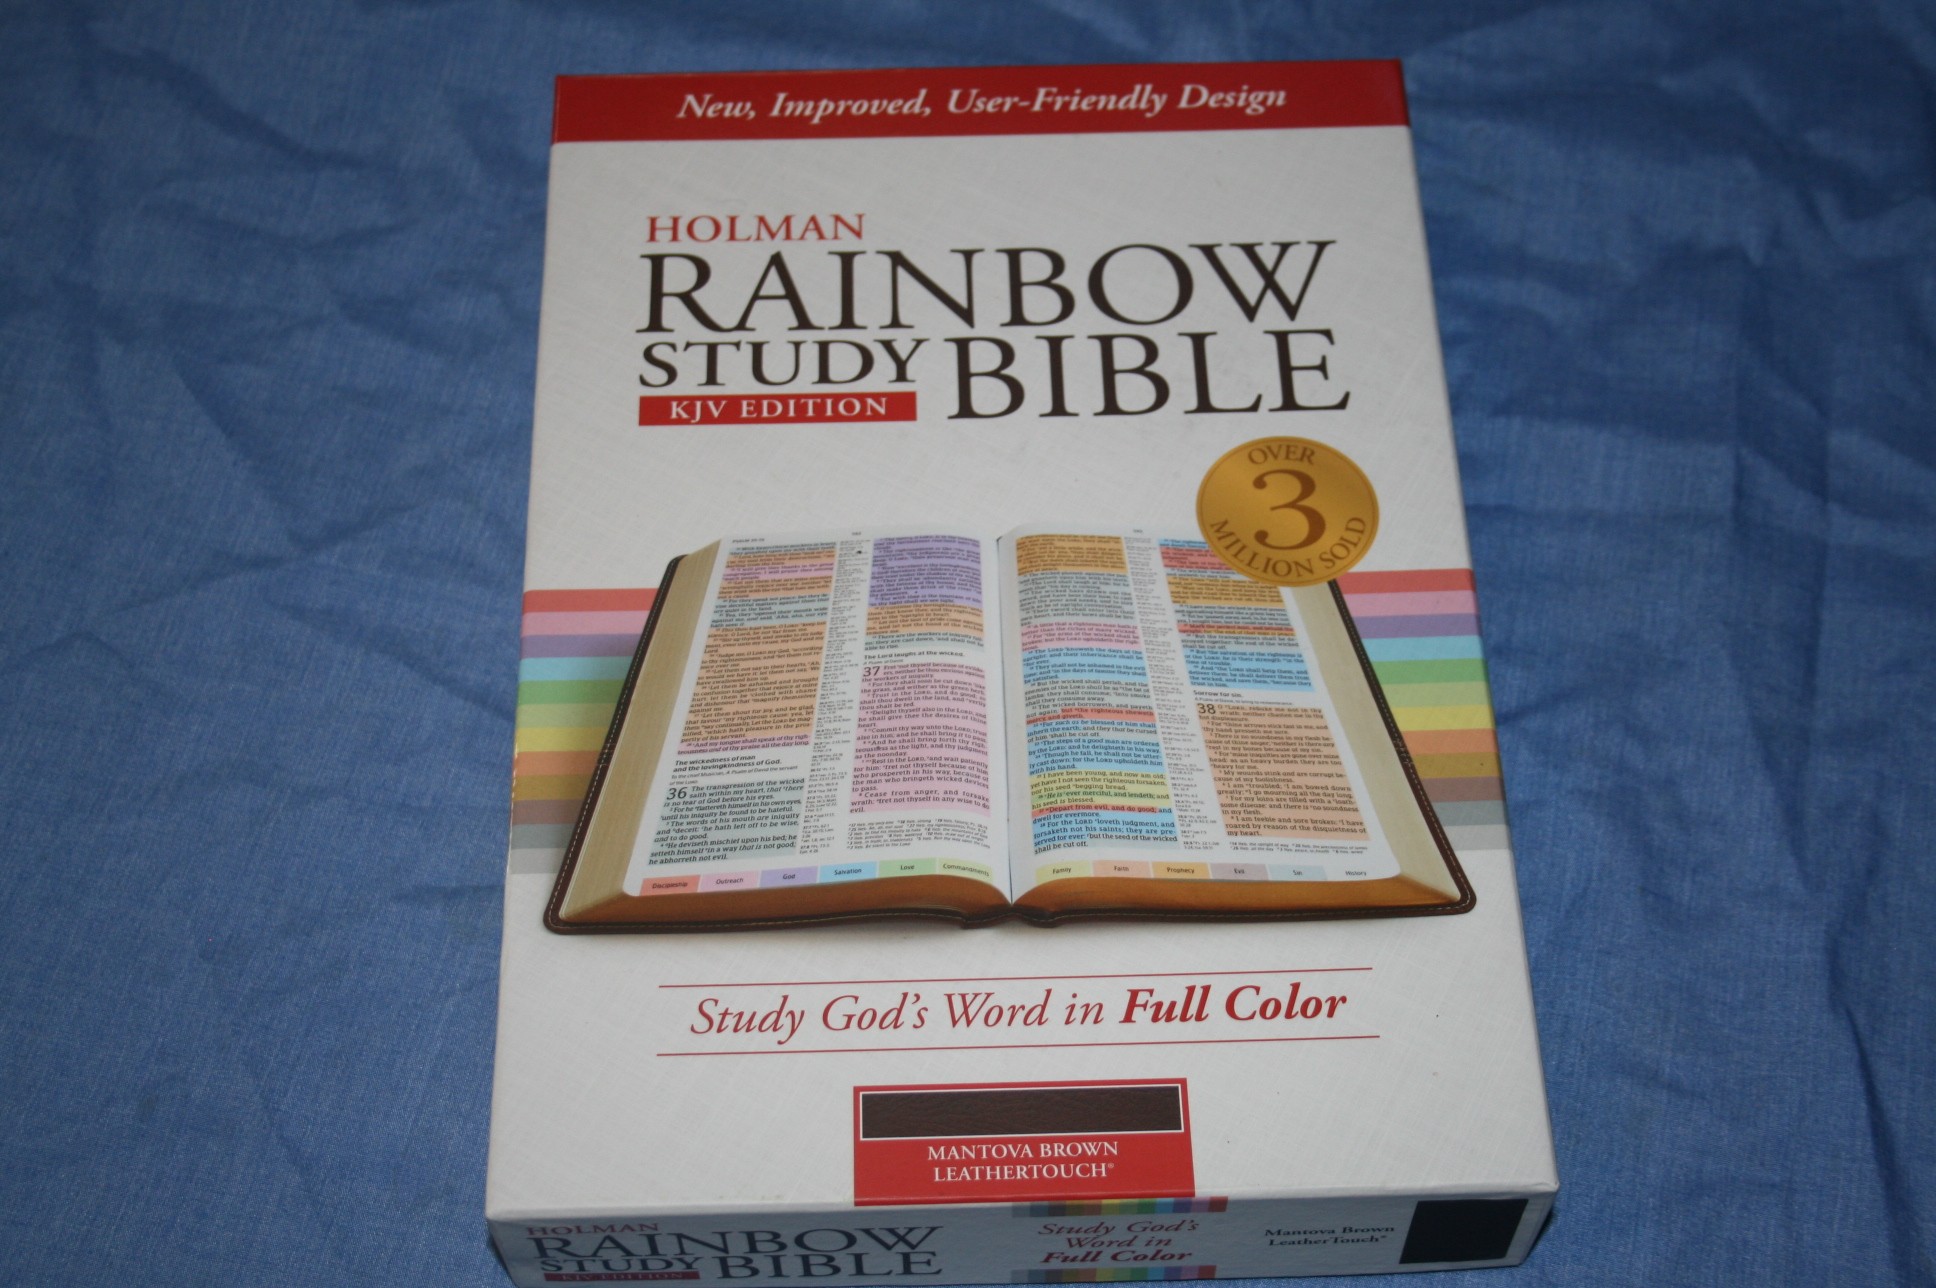 kjv study bible